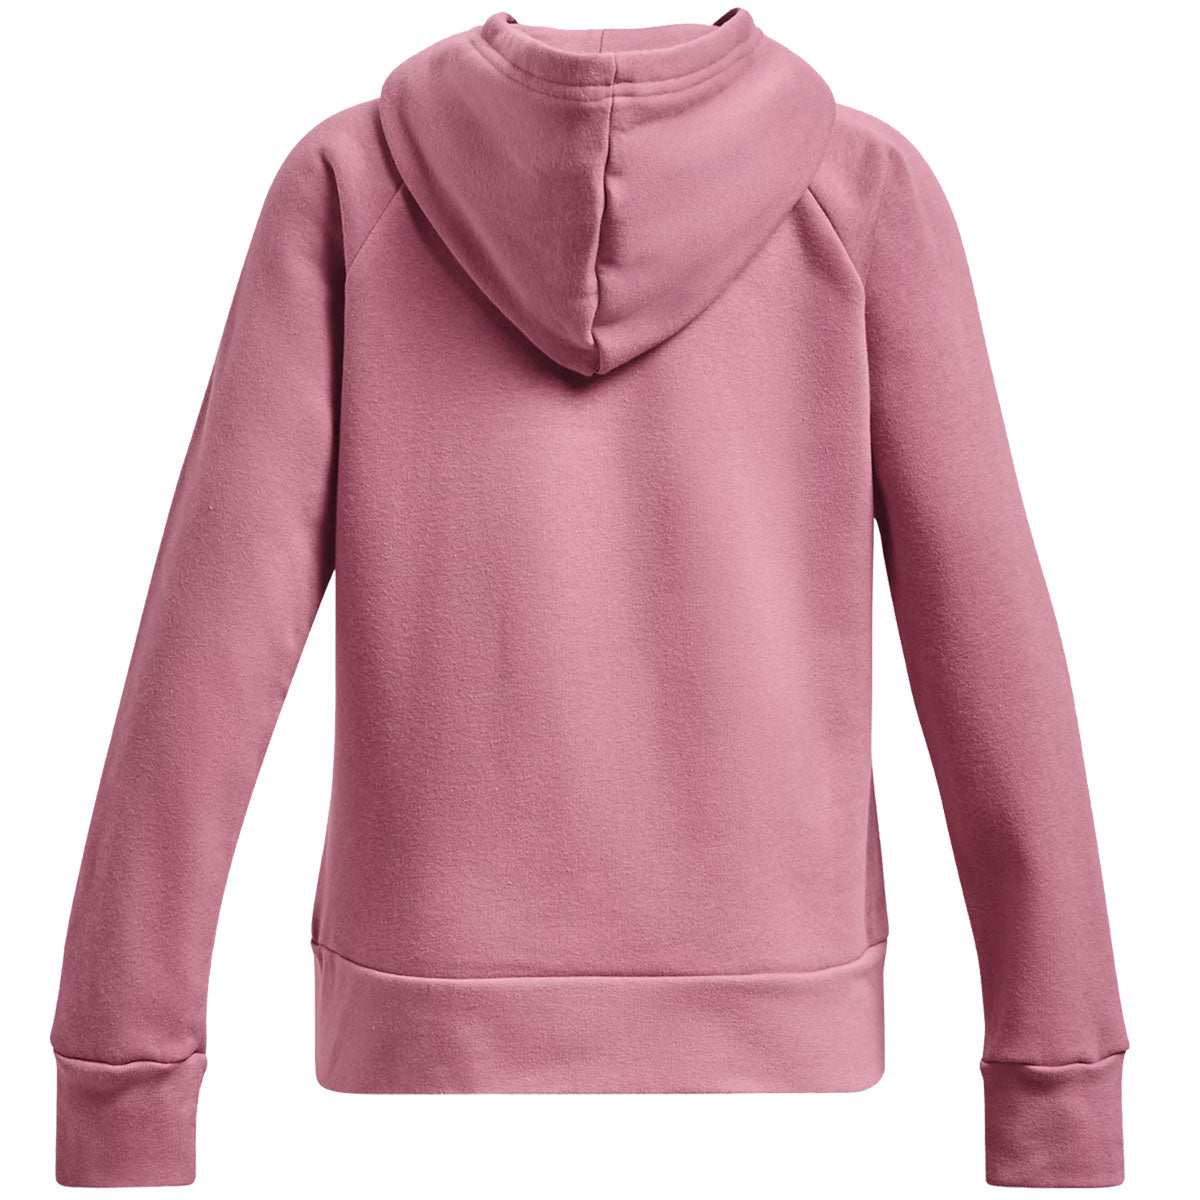 Under Armour Rival Fleece Big Logo Hoodie - Girls - Pink Elixir/White